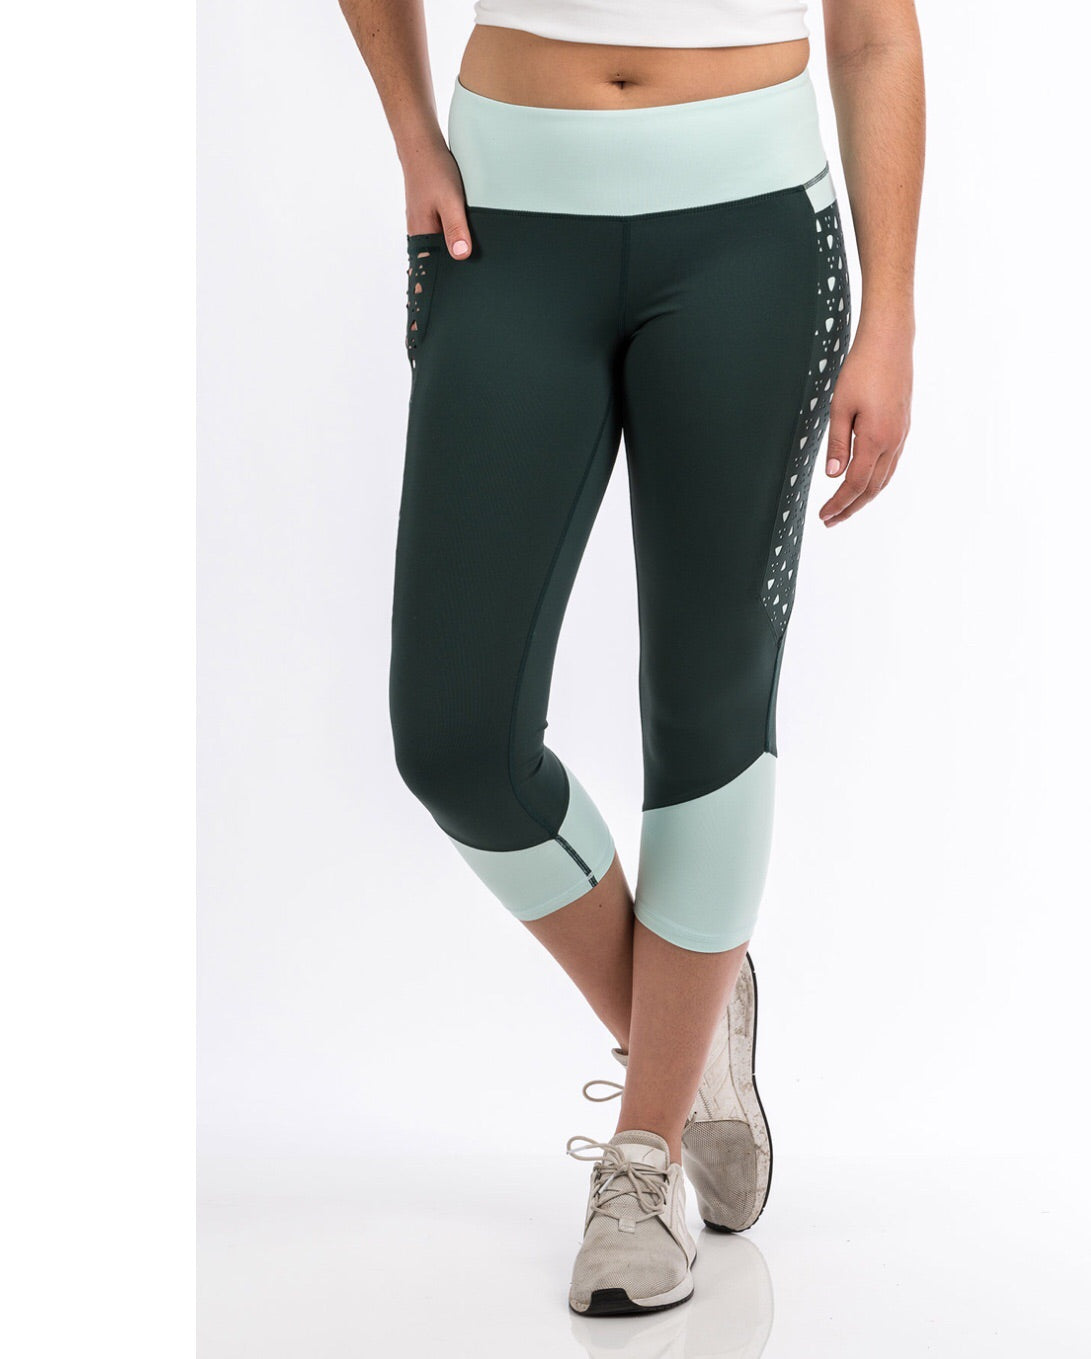 Jeans Women’s Cinch yoga pants MJU7853001